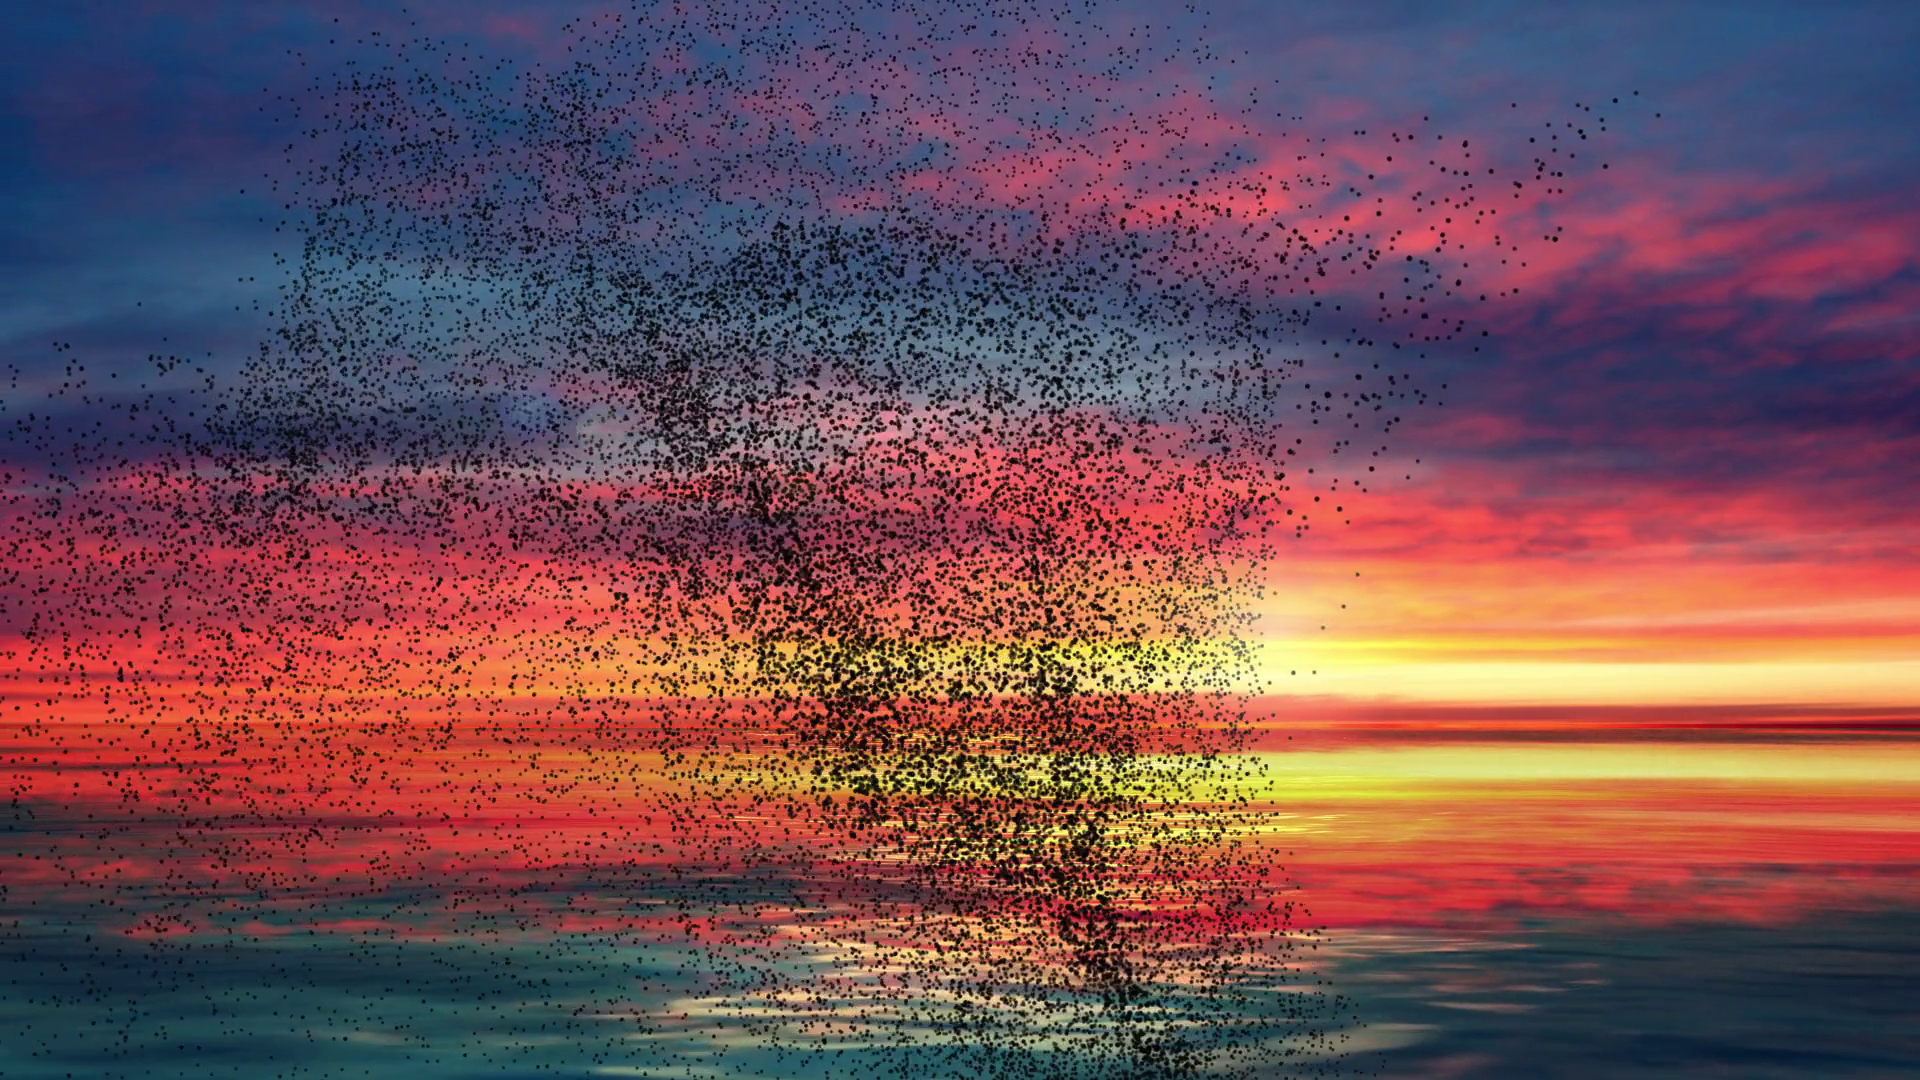 Flock of birds swarming against a sunset sky and ocean. Timelapse ...